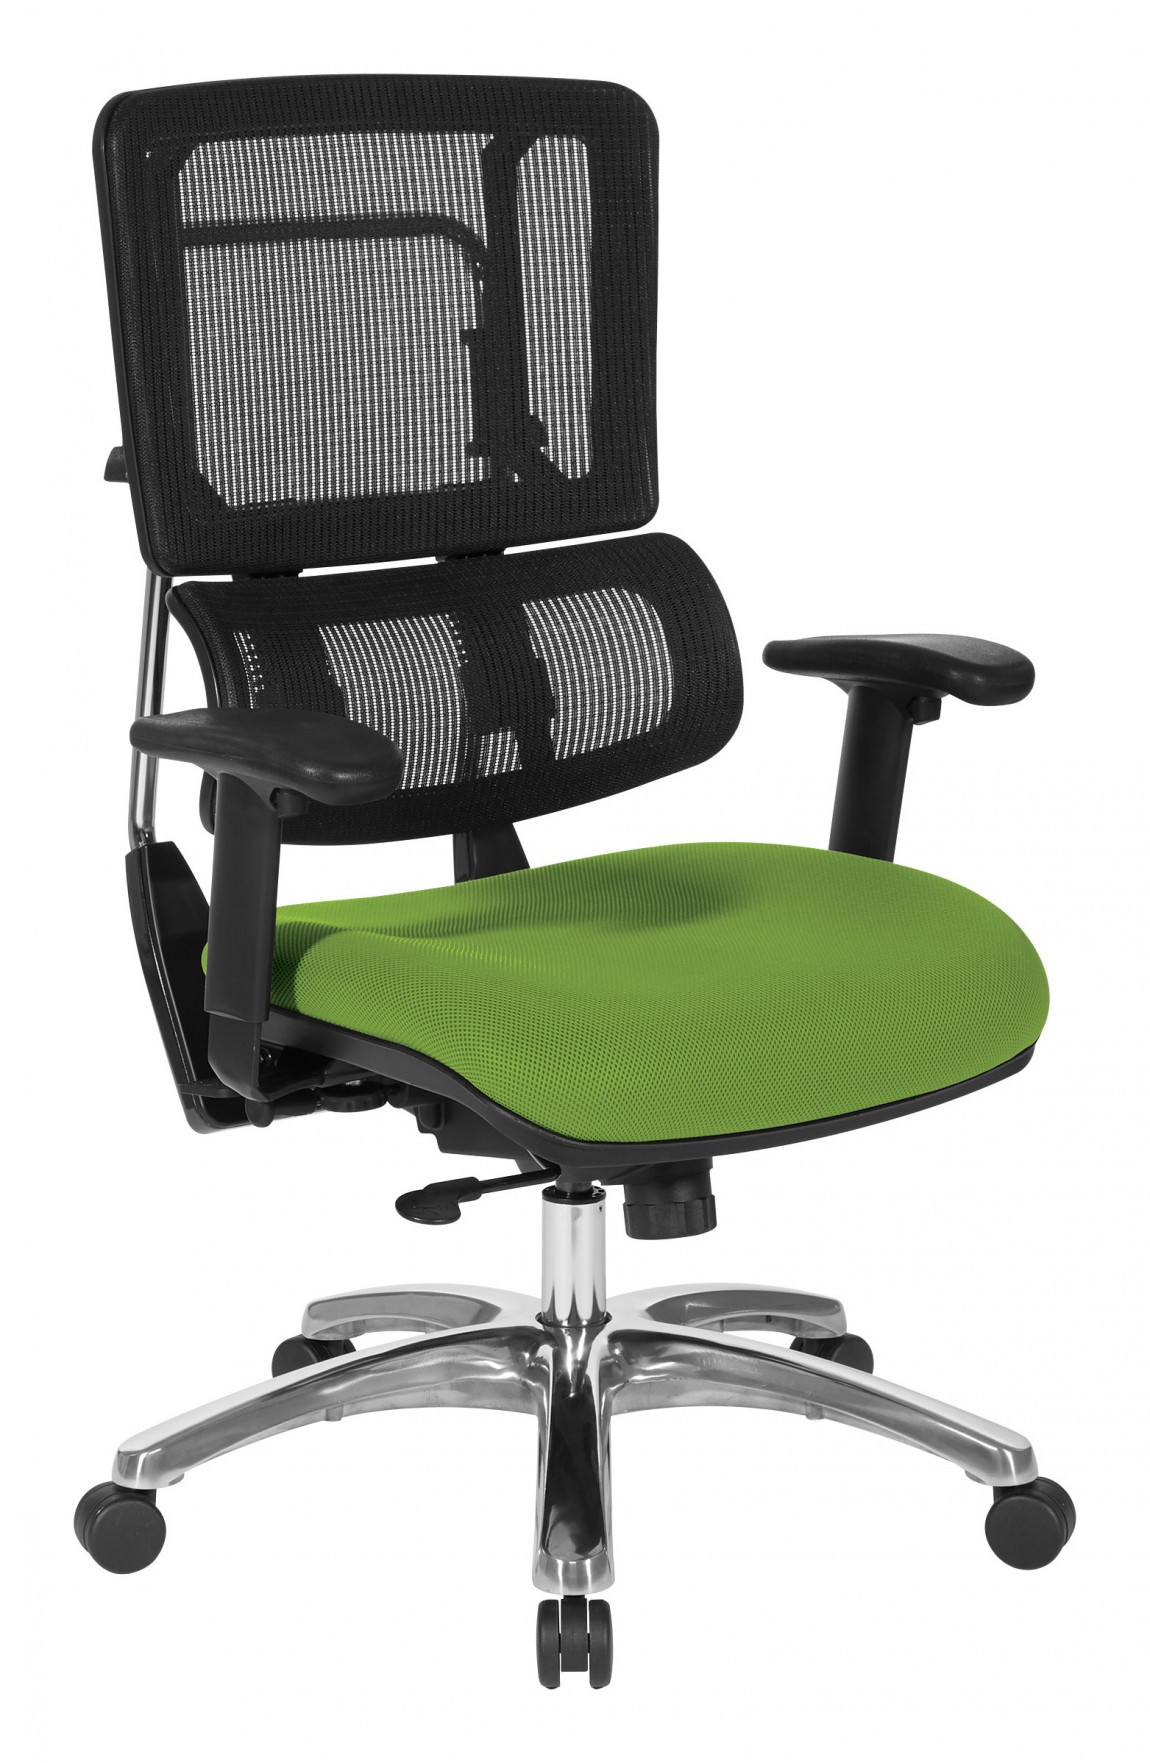 https://madisonliquidators.com/images/p/1150/25881-mesh-back-ergonomic-task-chair-1.jpg